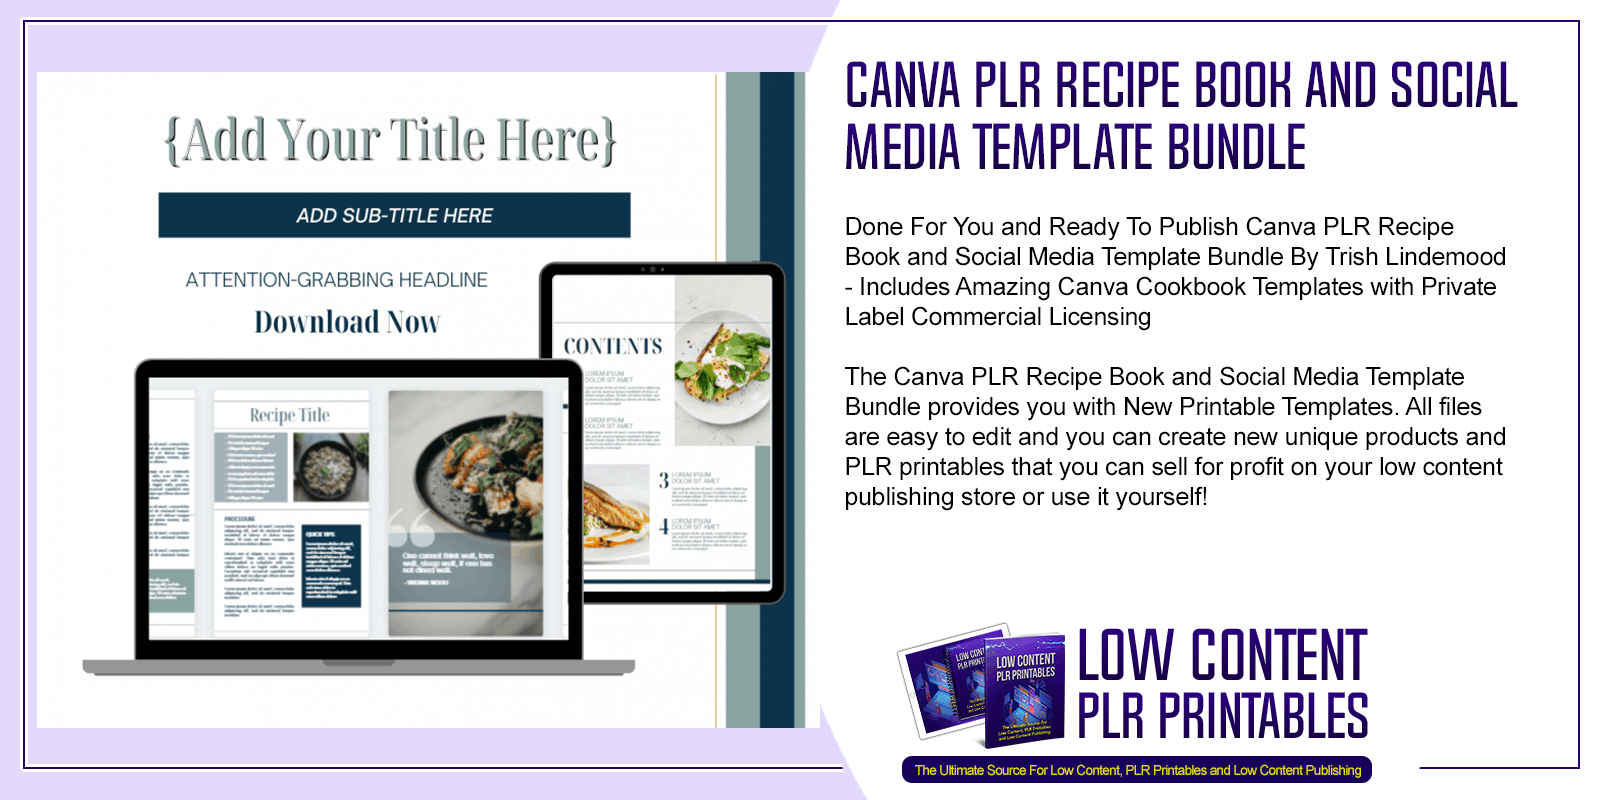 Canva PLR Recipe Book and Social Media Template Bundle